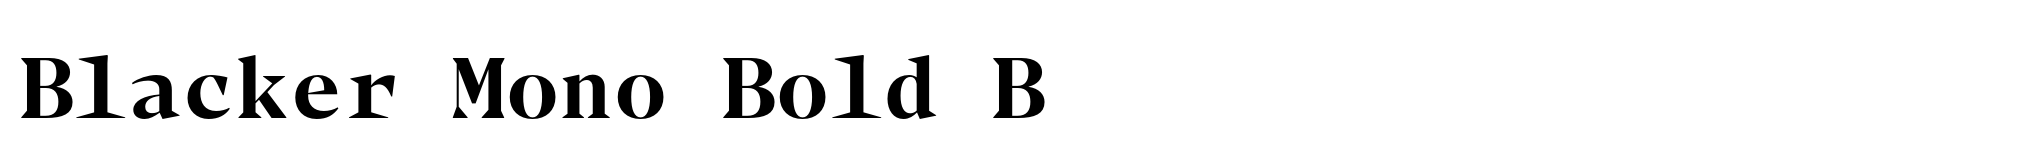 Blacker Mono Bold B image